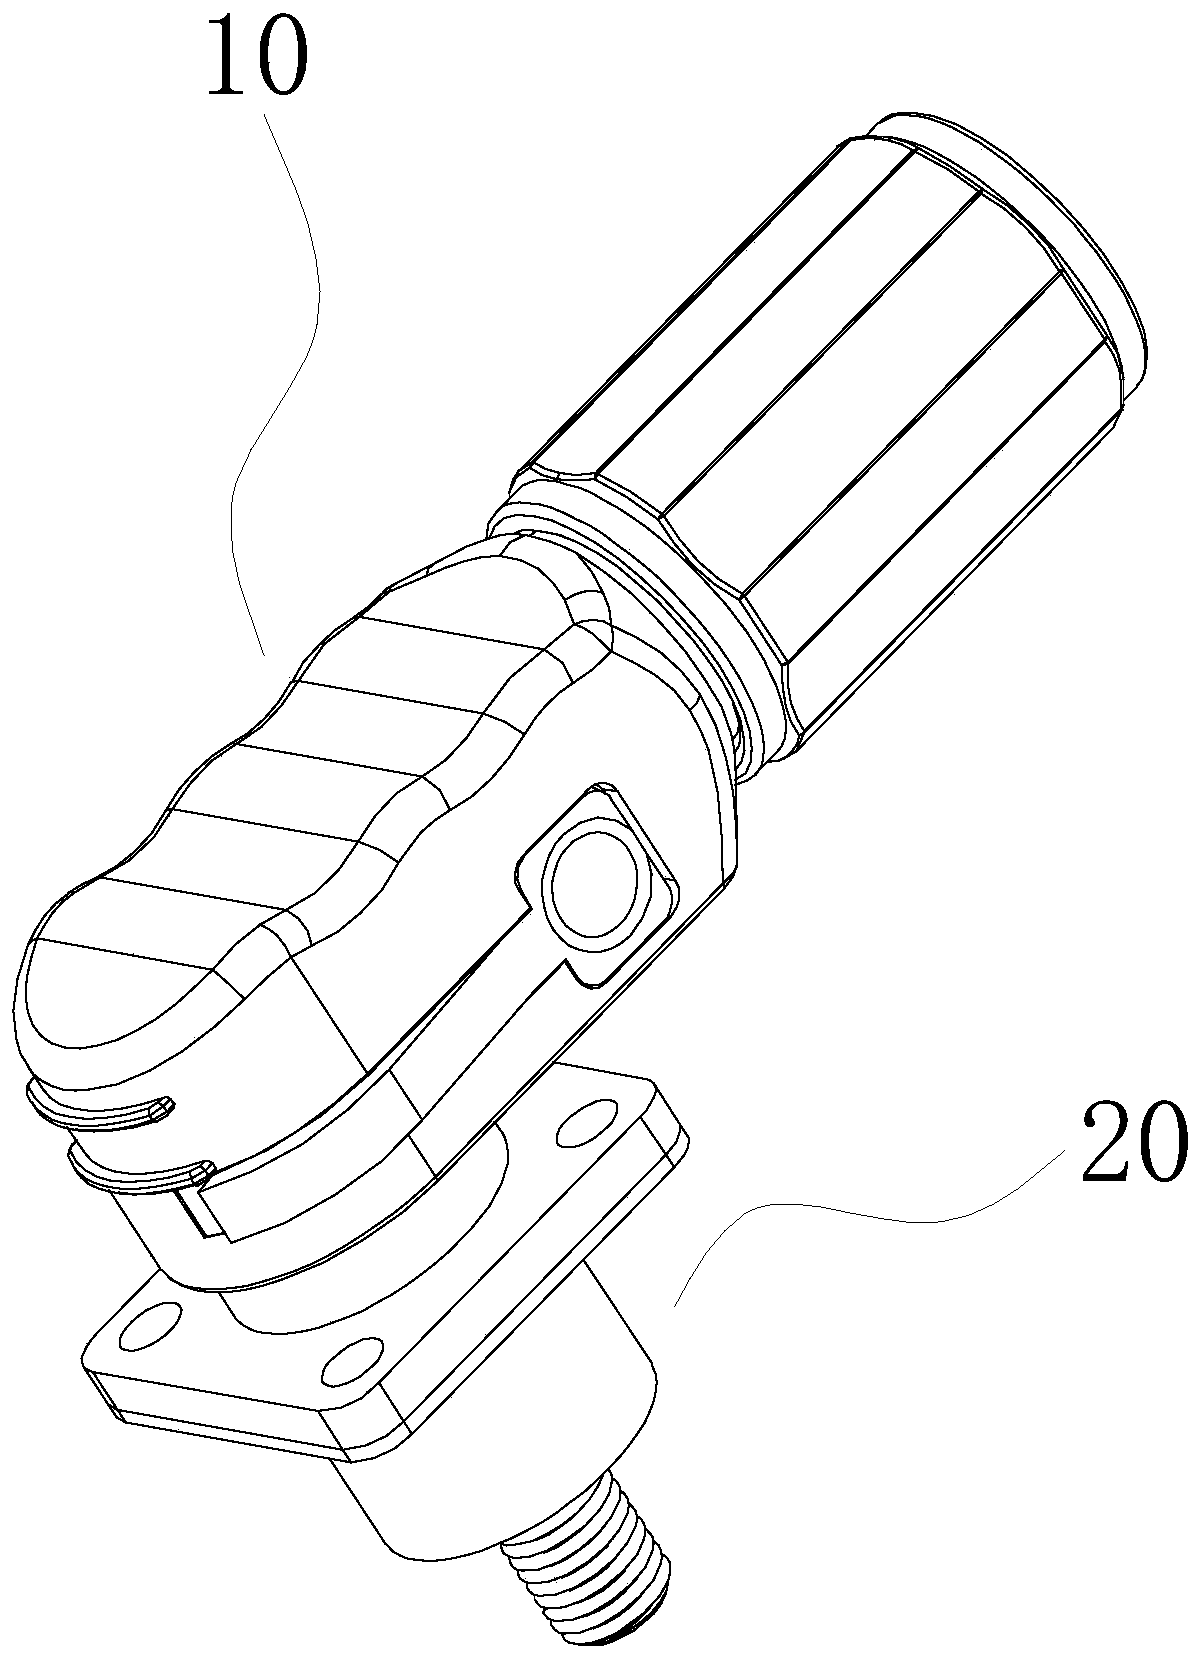 A single-core elbow high-voltage connector